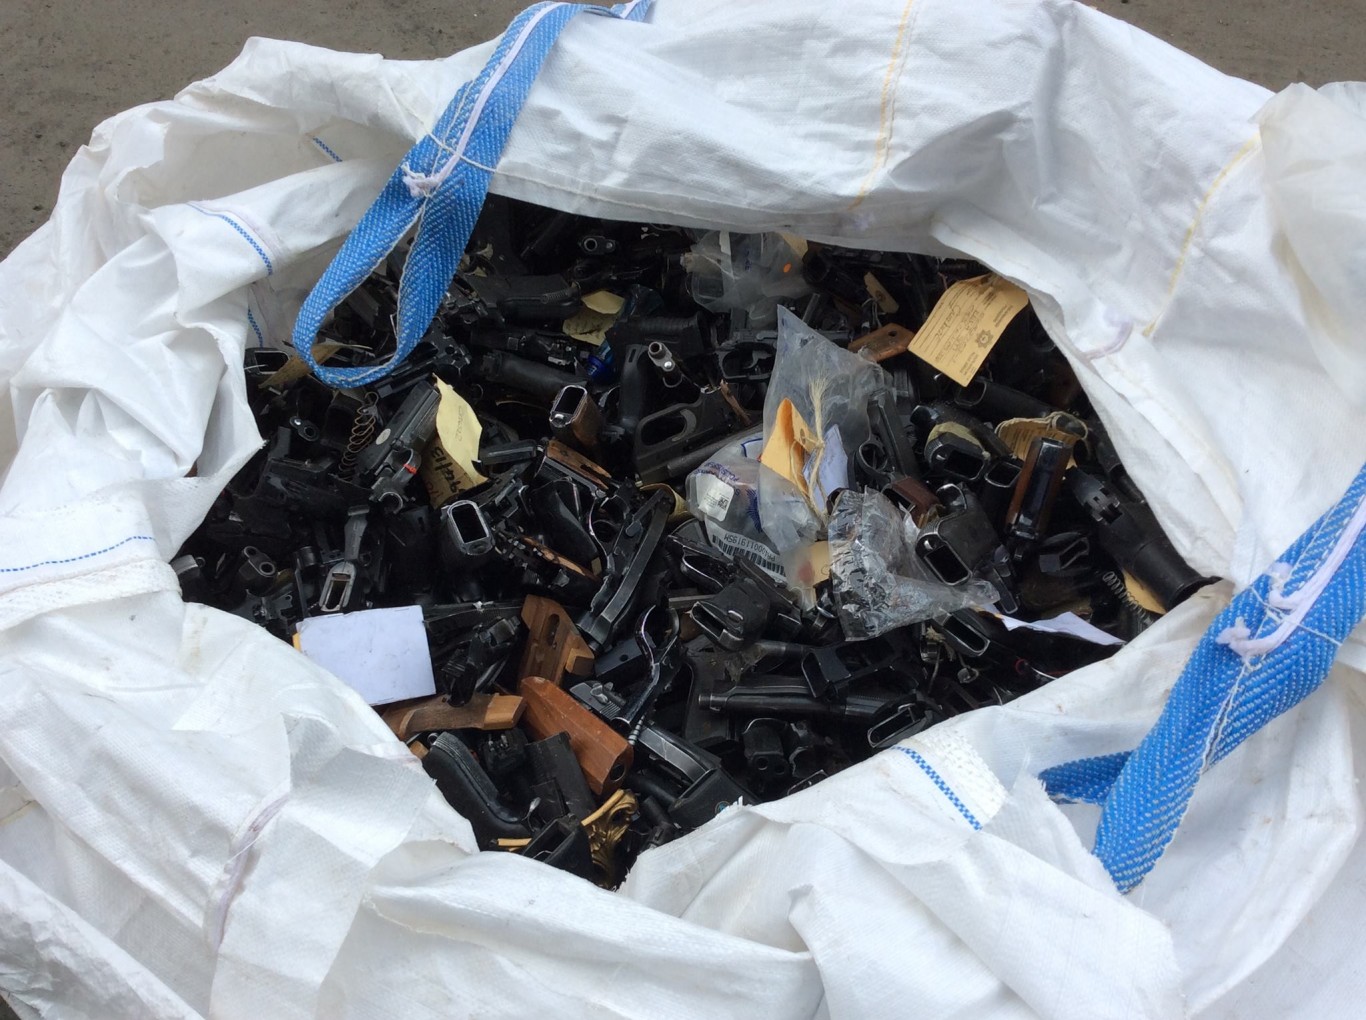 SAPS destroy 9 477 firearms in Vereeniging, Gauteng